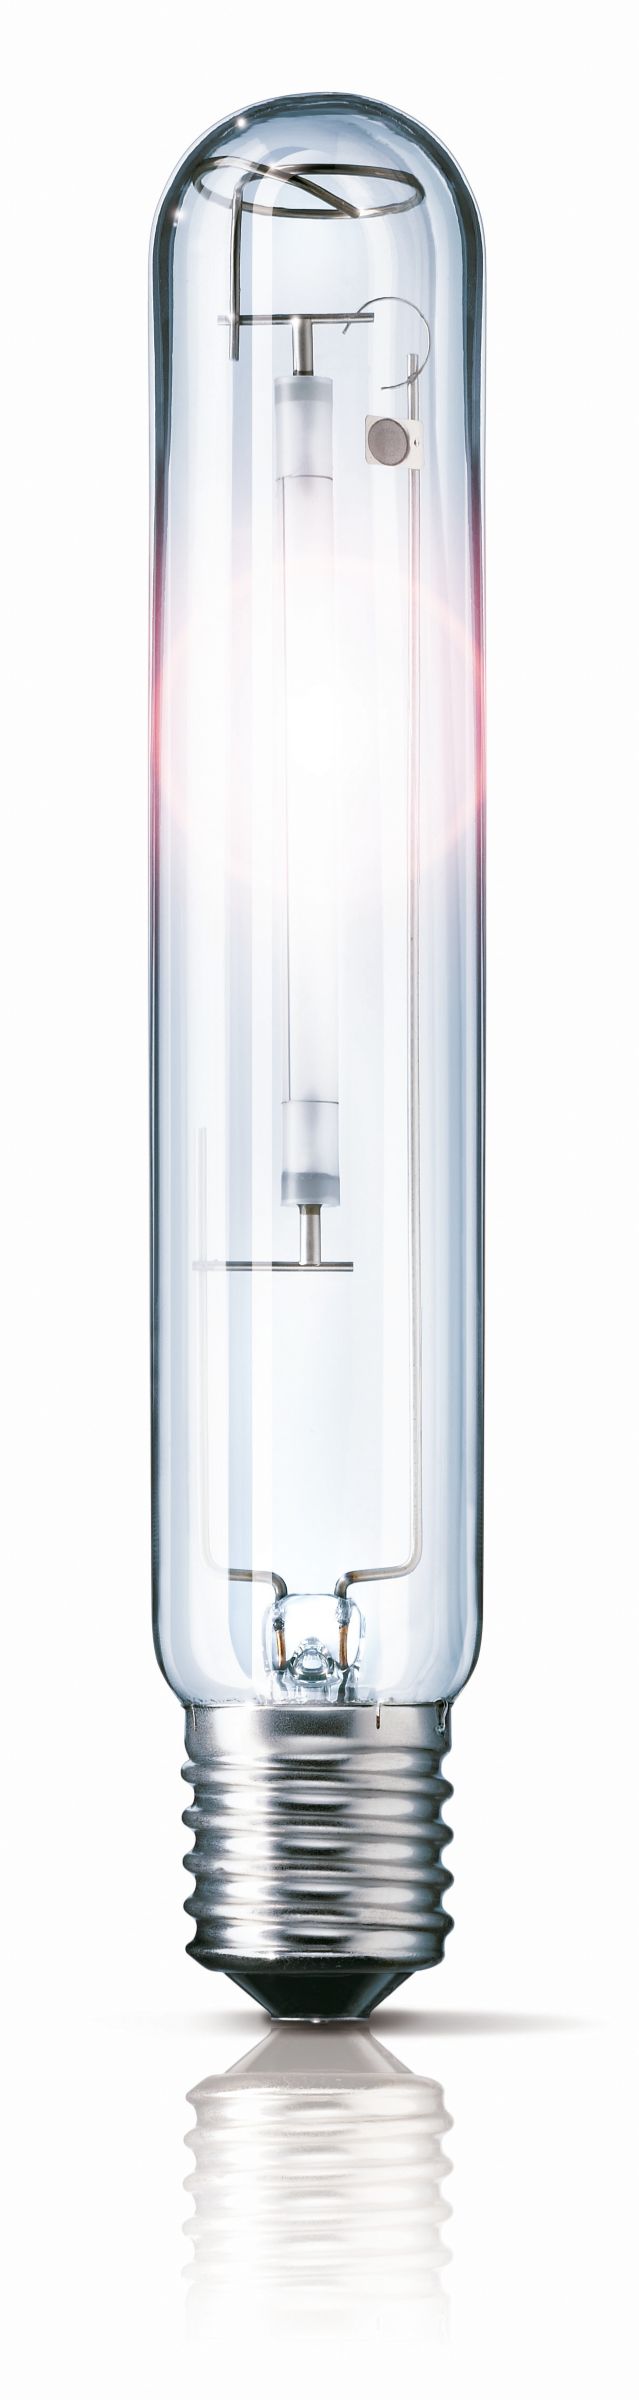 LONG LIFE HIGH PRESSURE SODIUM TUBULAR  LAMP HPS 250W E40 SON-T 